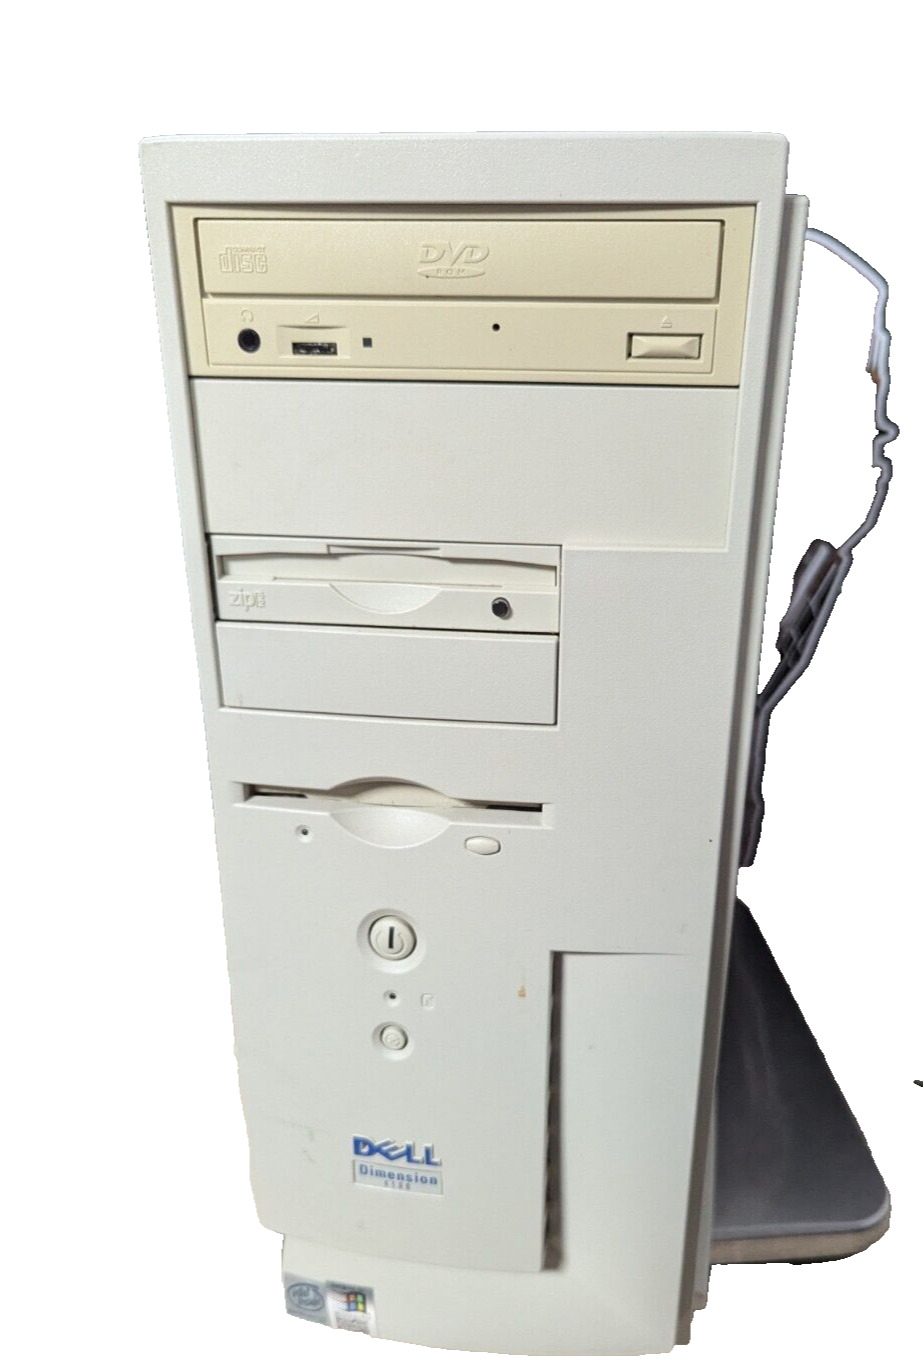 Dell Dimensions 4100 Pentium III 64MB RAM Vintage Gaming Desktop Computer